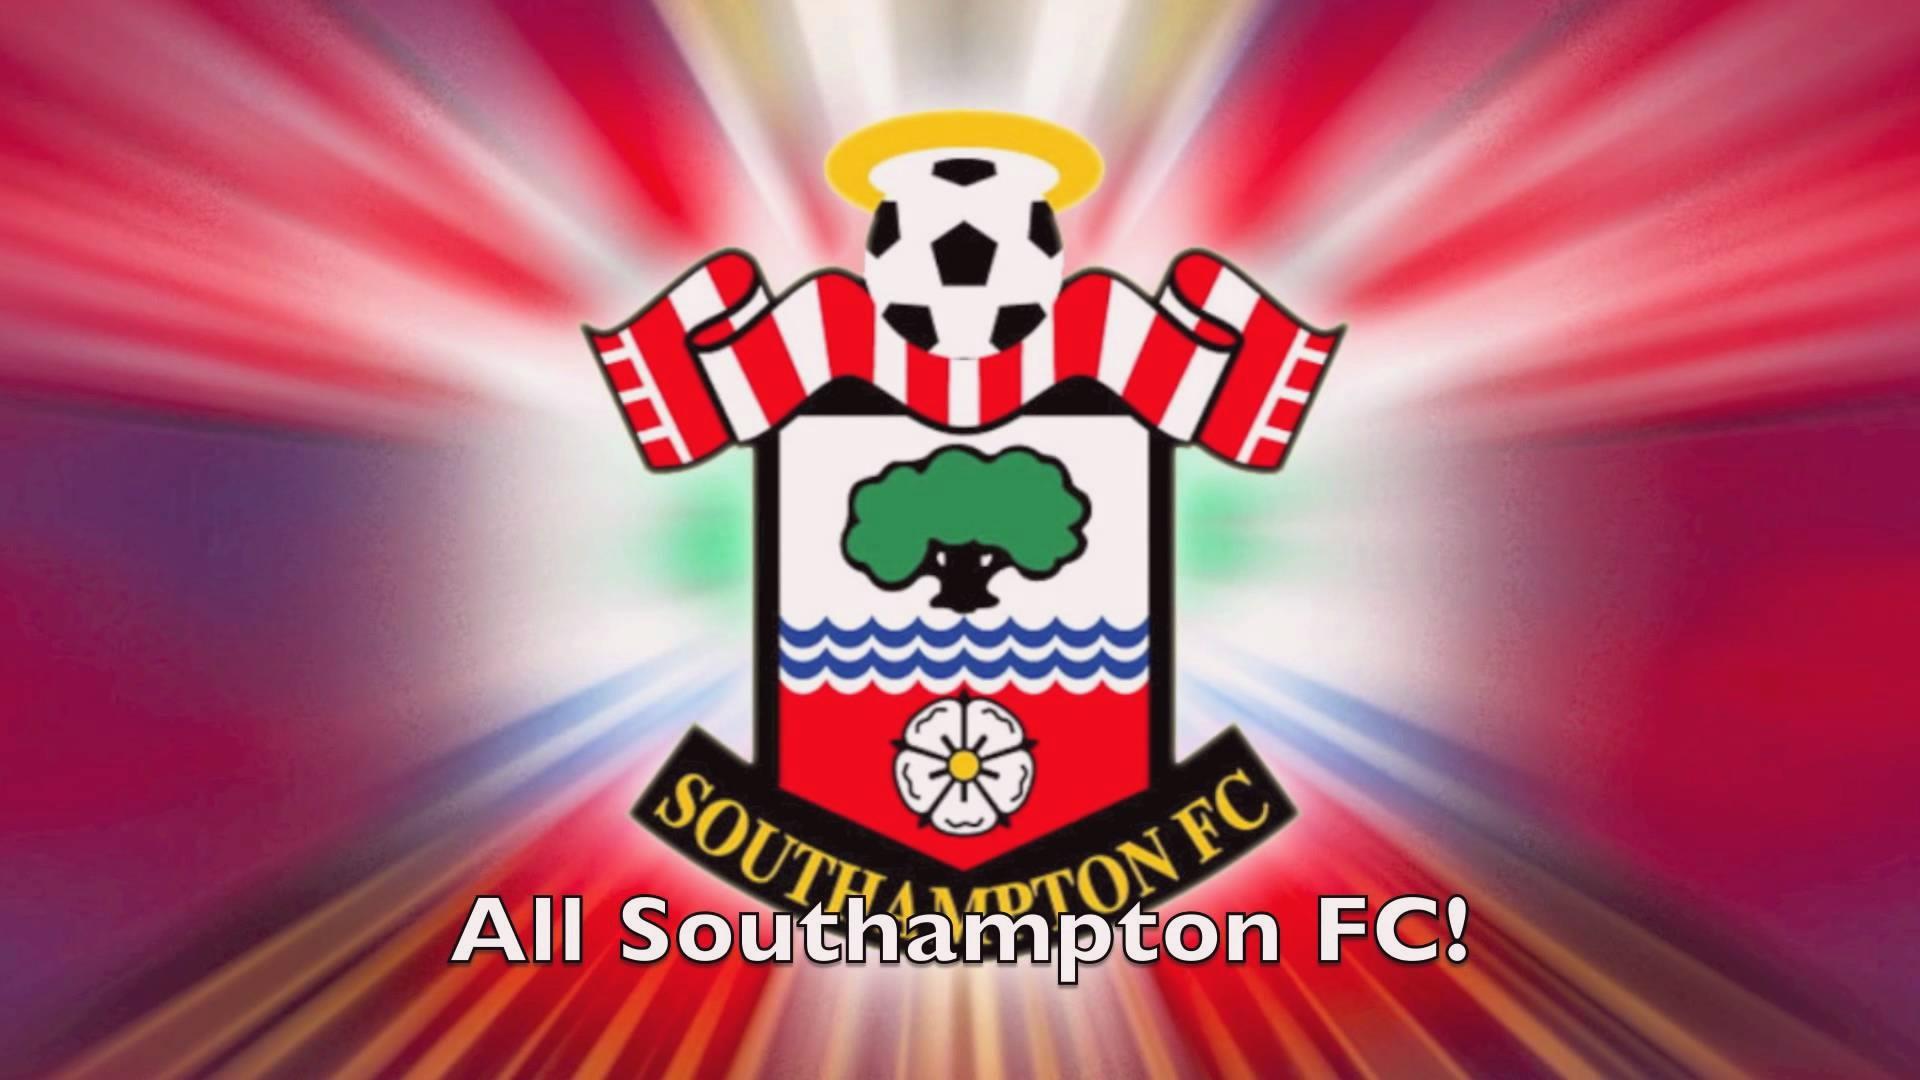 Southampton FC at 1280 x 960 size wallpapers HD quality